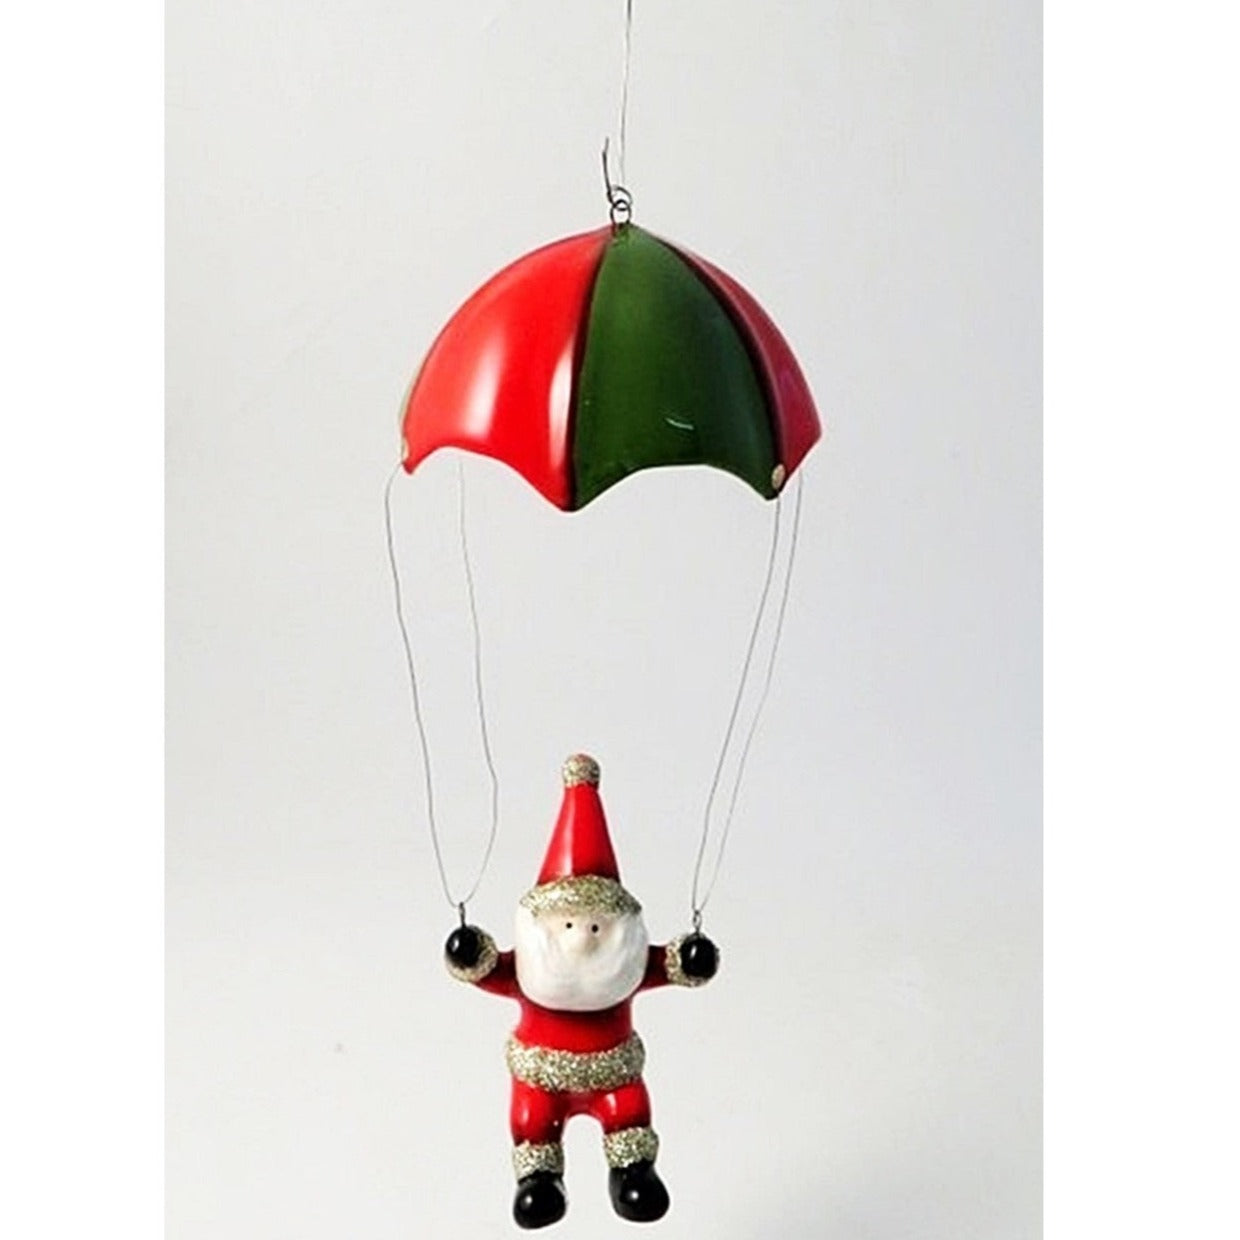 Ceramic Parachute Hanging Santa